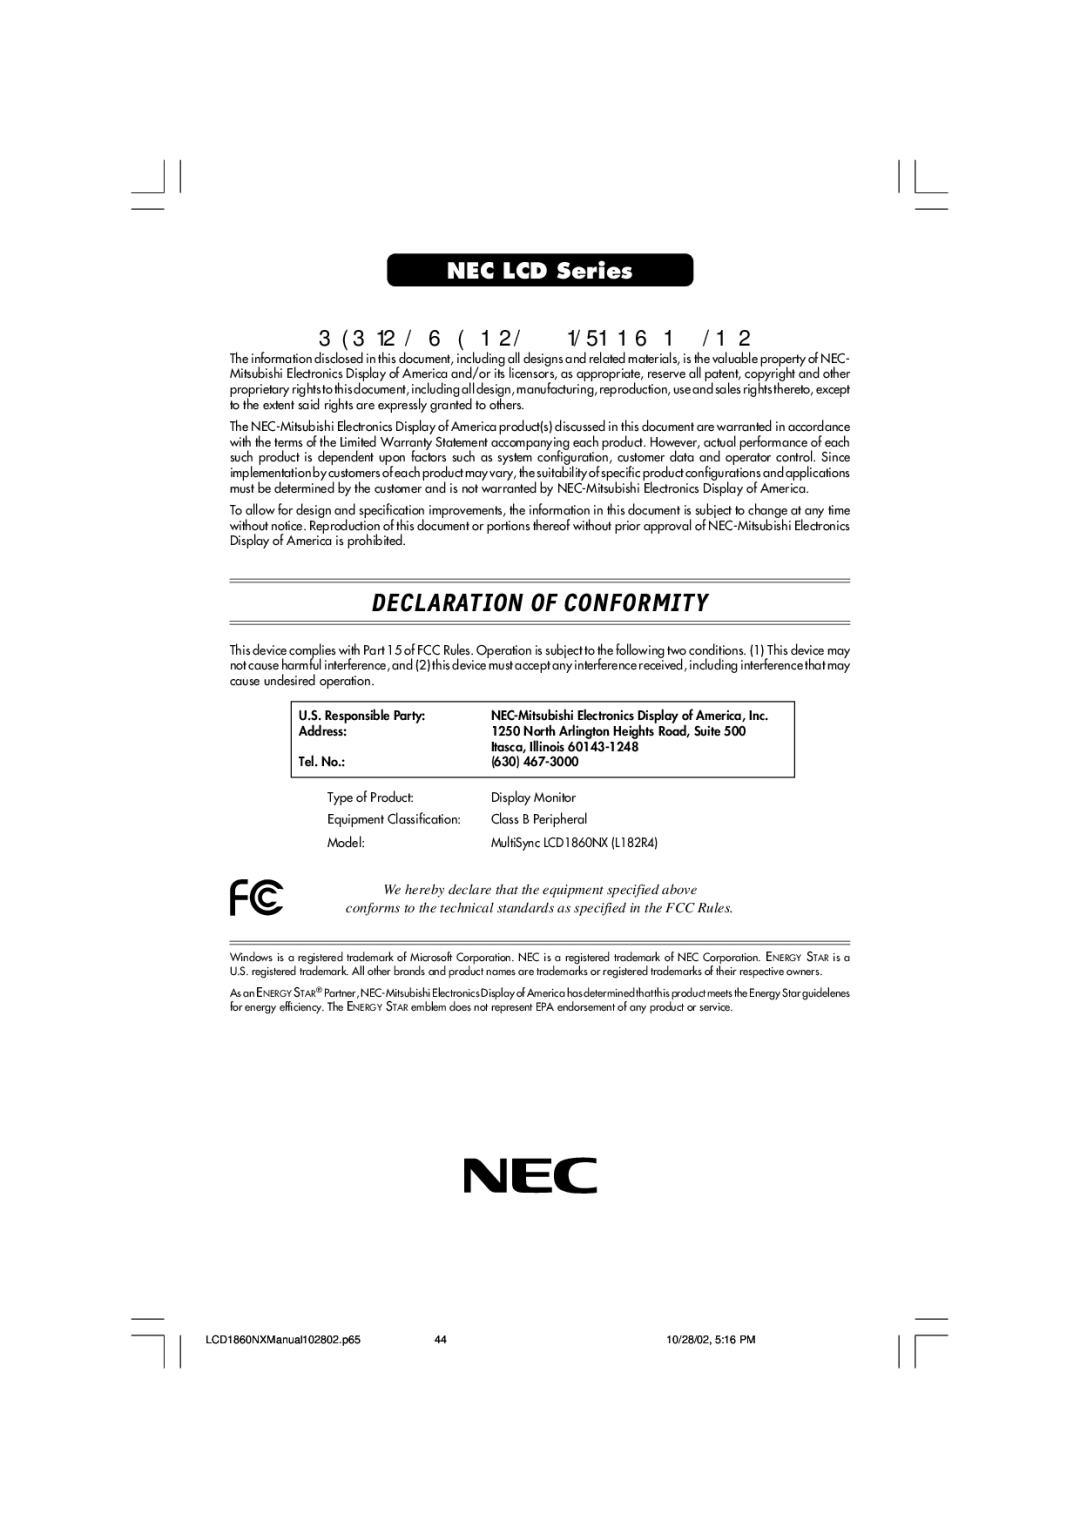 NEC LCD1860NX, L182R4 manual Declaration of Conformity 